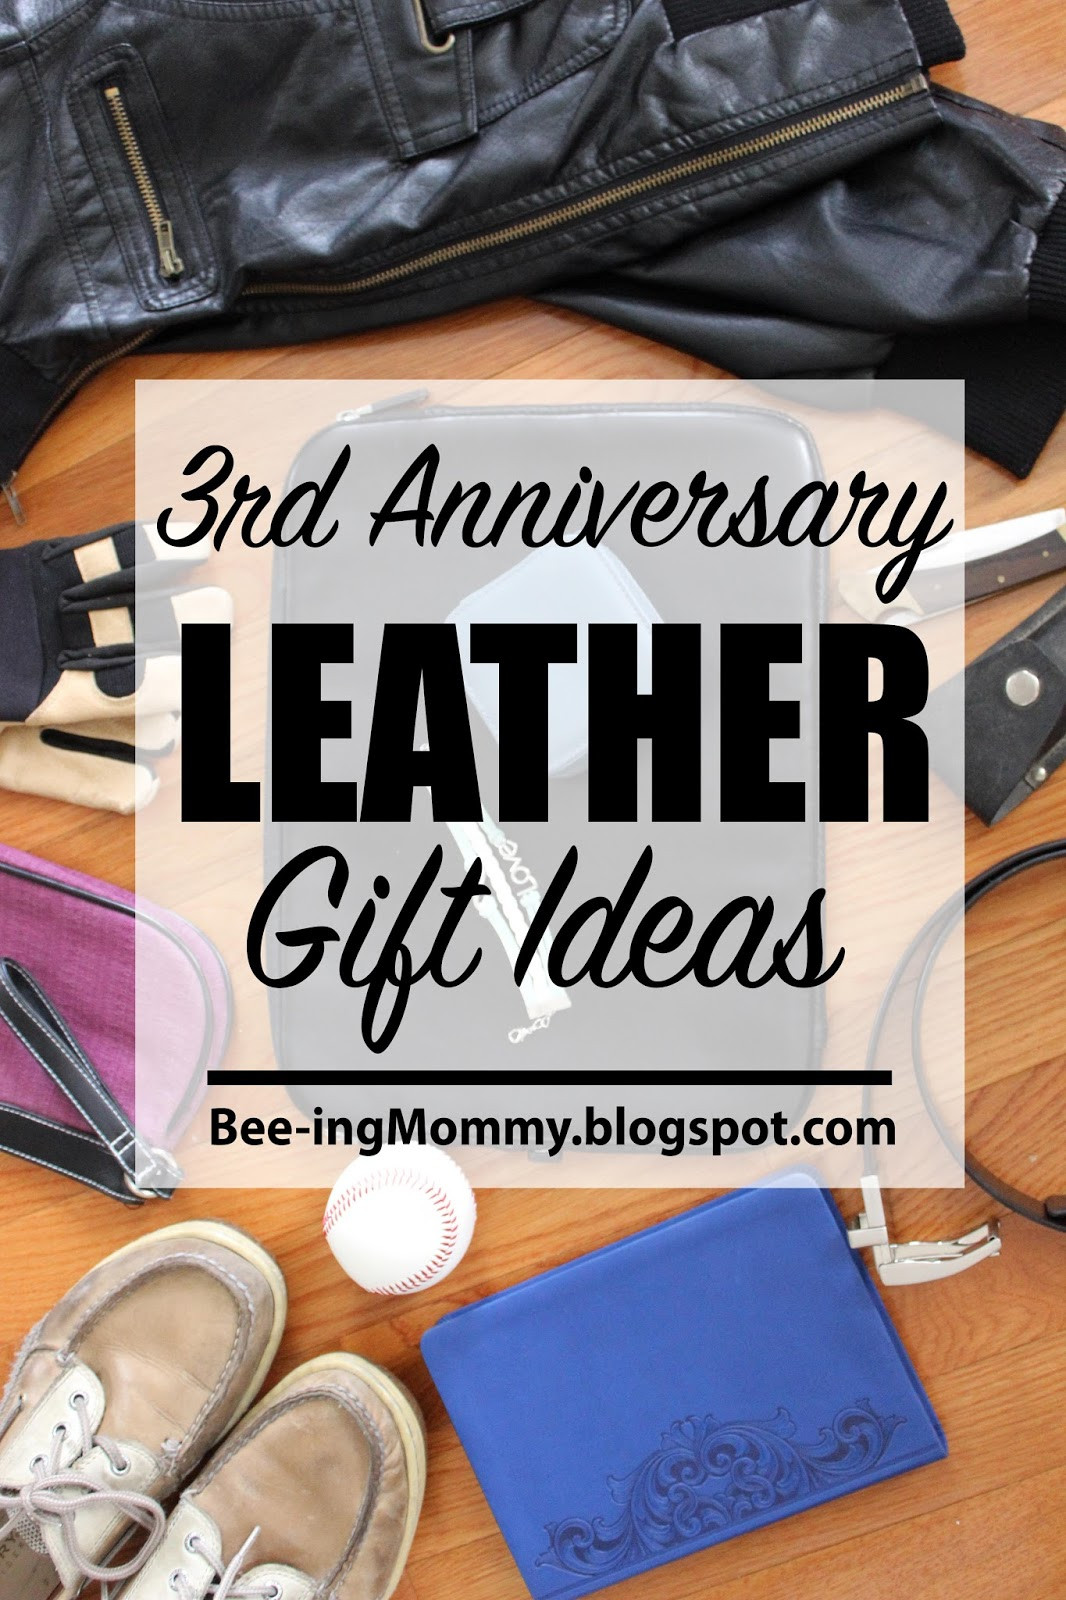 Third Wedding Anniversary Gift Ideas
 Bee ing Mommy Blog Third Wedding Anniversary Gift Ideas